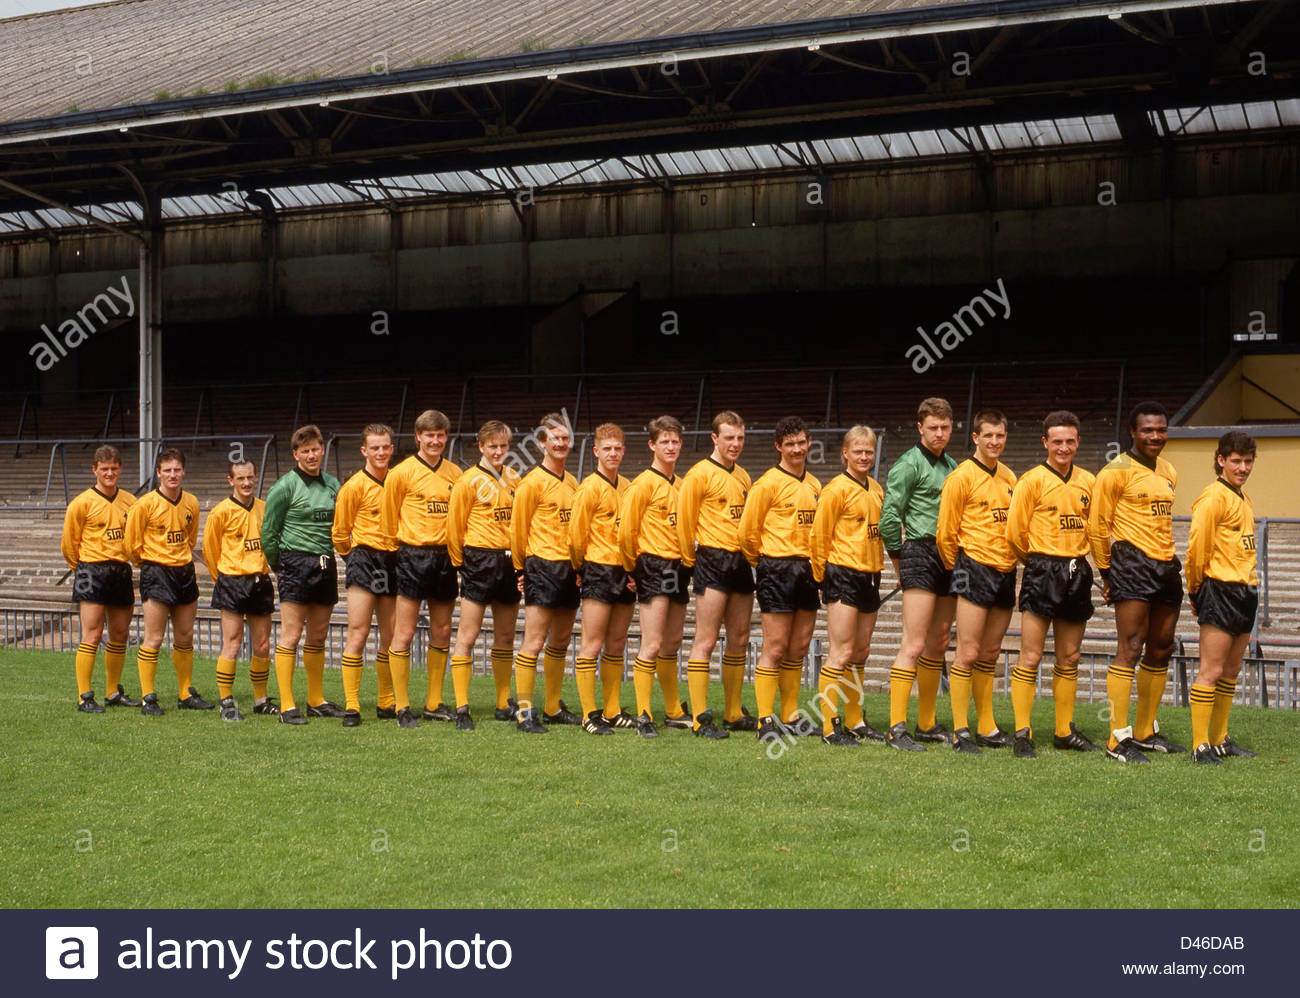 Amazing Wolverhampton Wanderers F.C. Pictures & Backgrounds